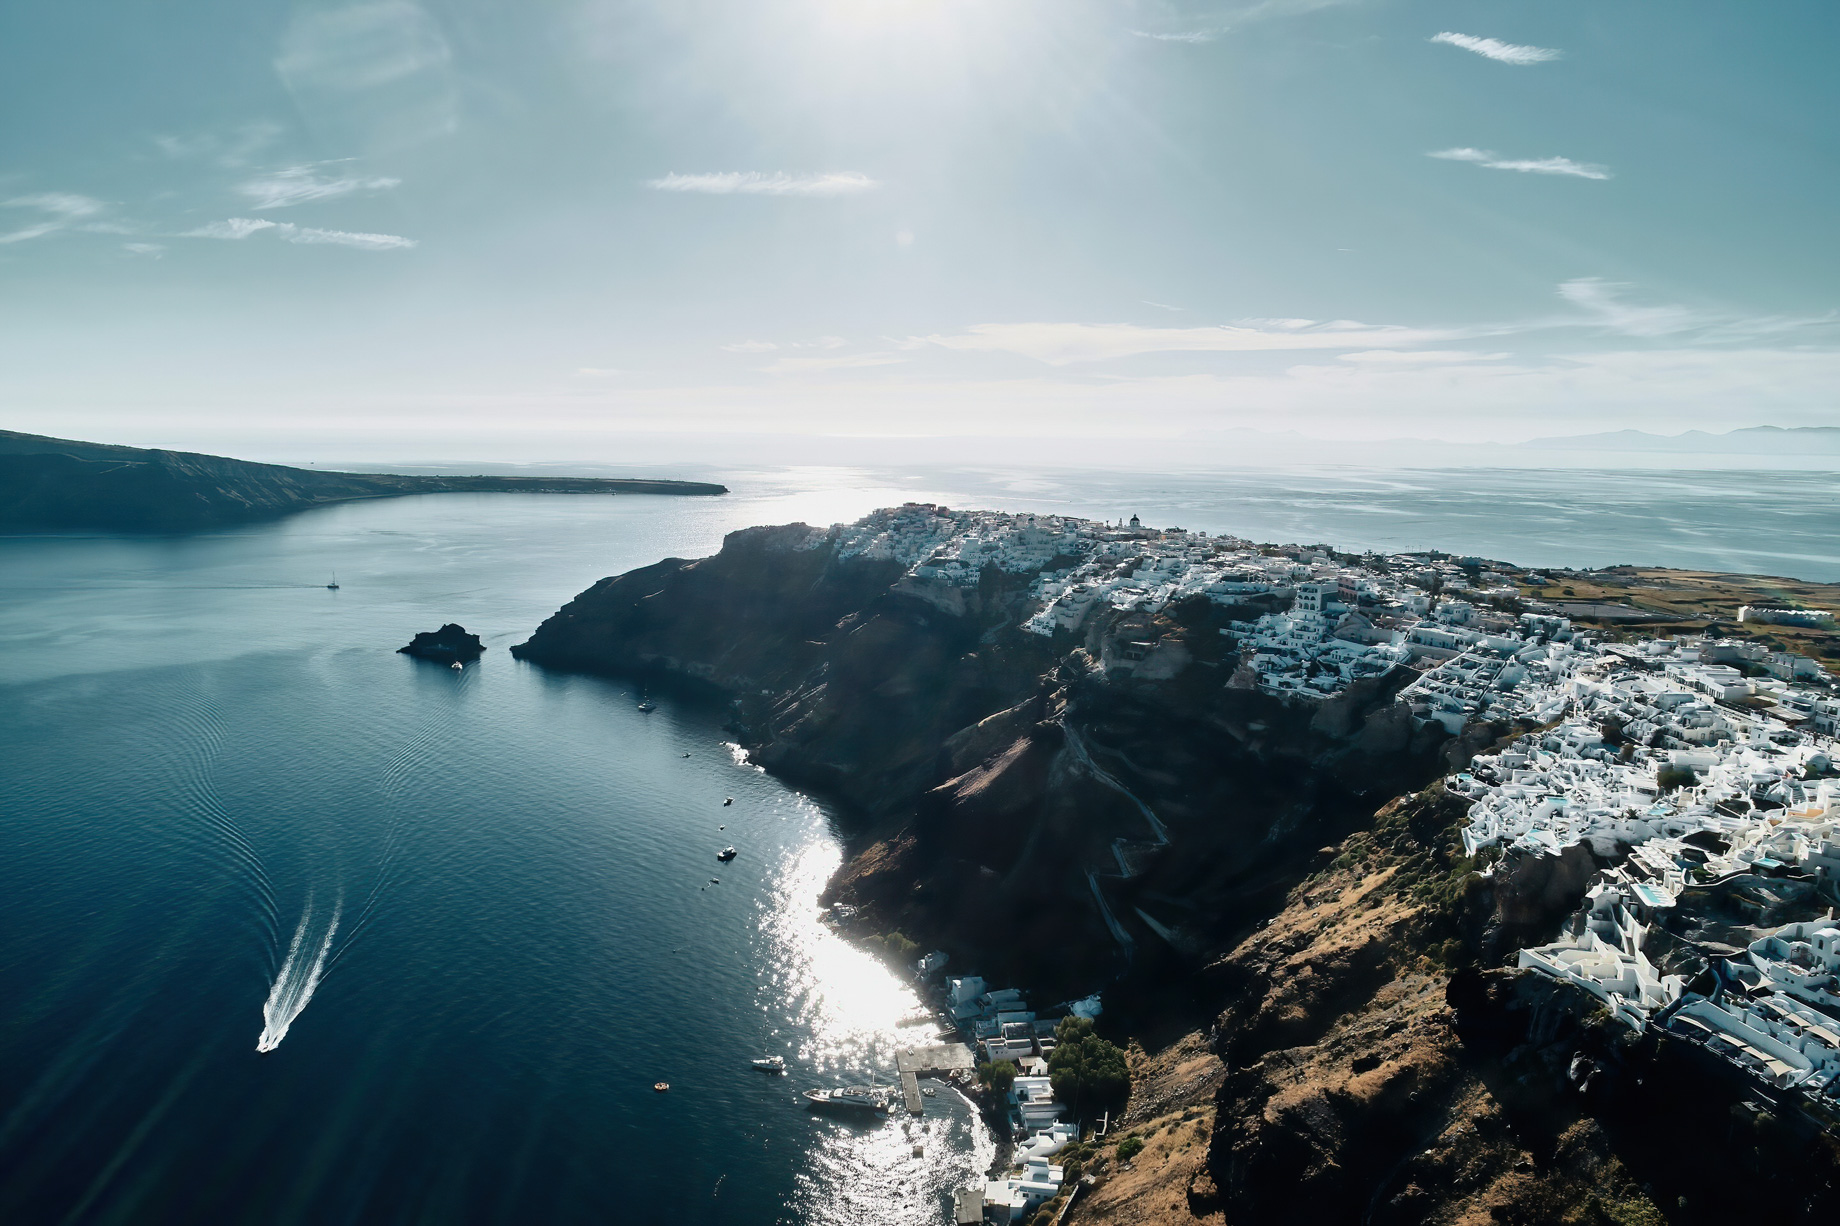 Mystique Hotel Santorini – Oia, Santorini Island, Greece – Cliffside Ocean View Aerial